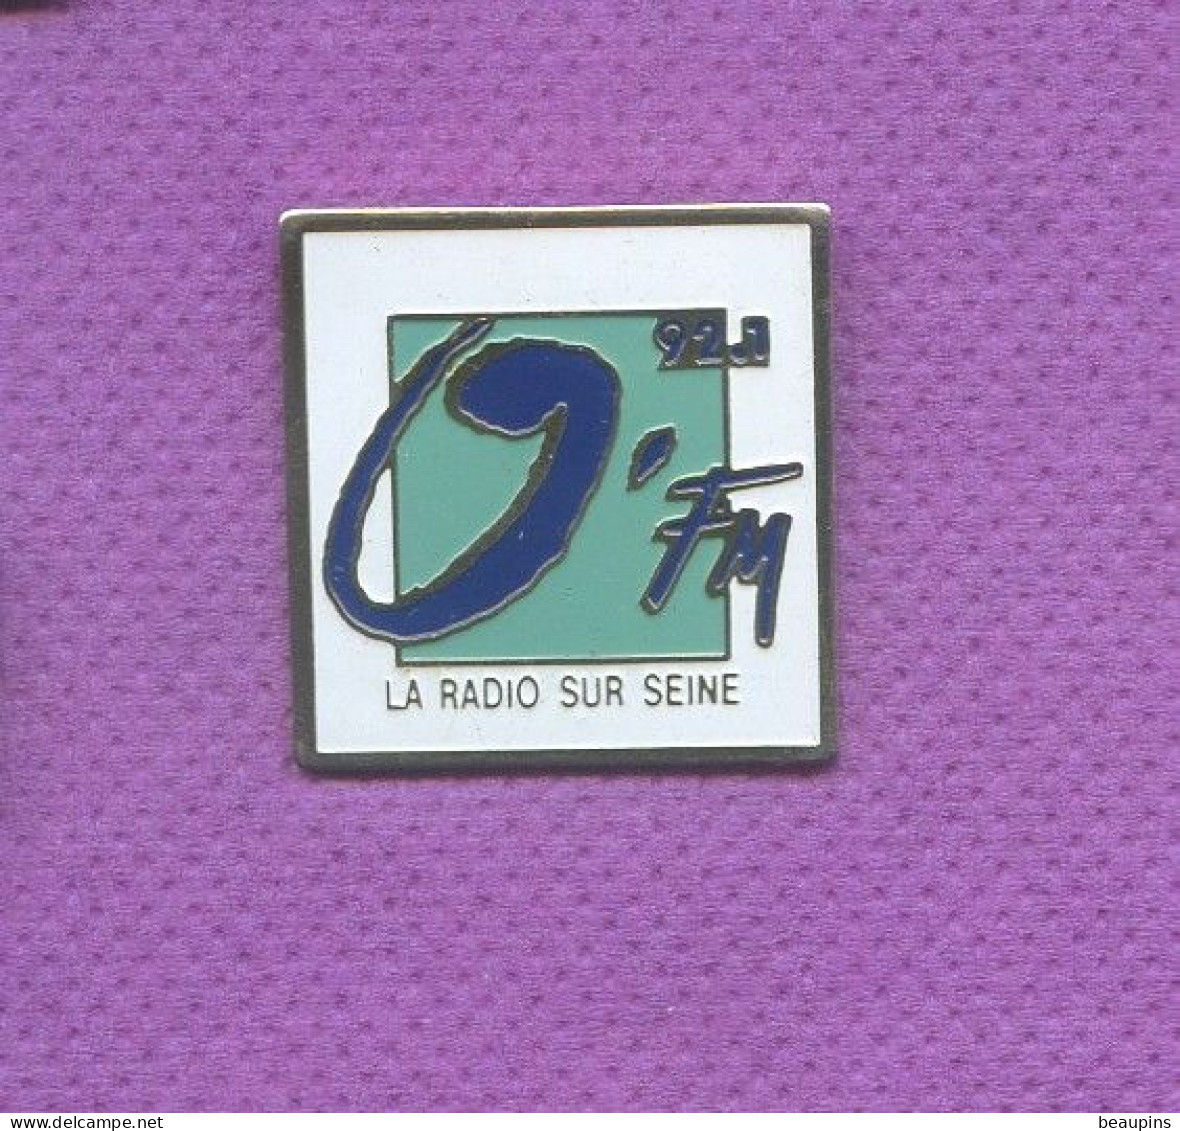 Rare Pins Media O Fm La Radio Sur Seine L148 - Media